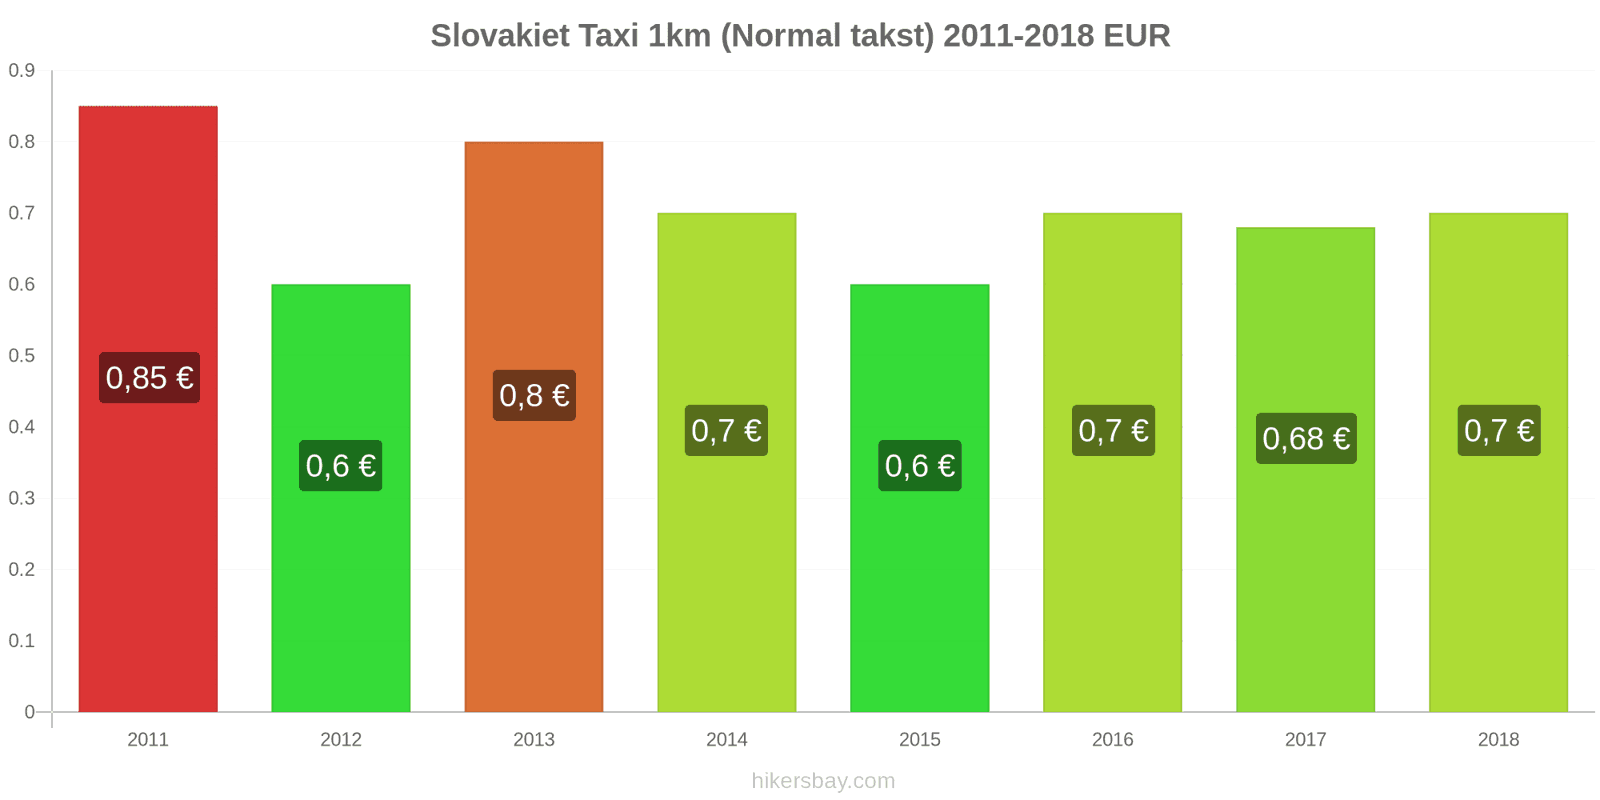 Slovakiet prisændringer Taxi 1km (normal takst) hikersbay.com